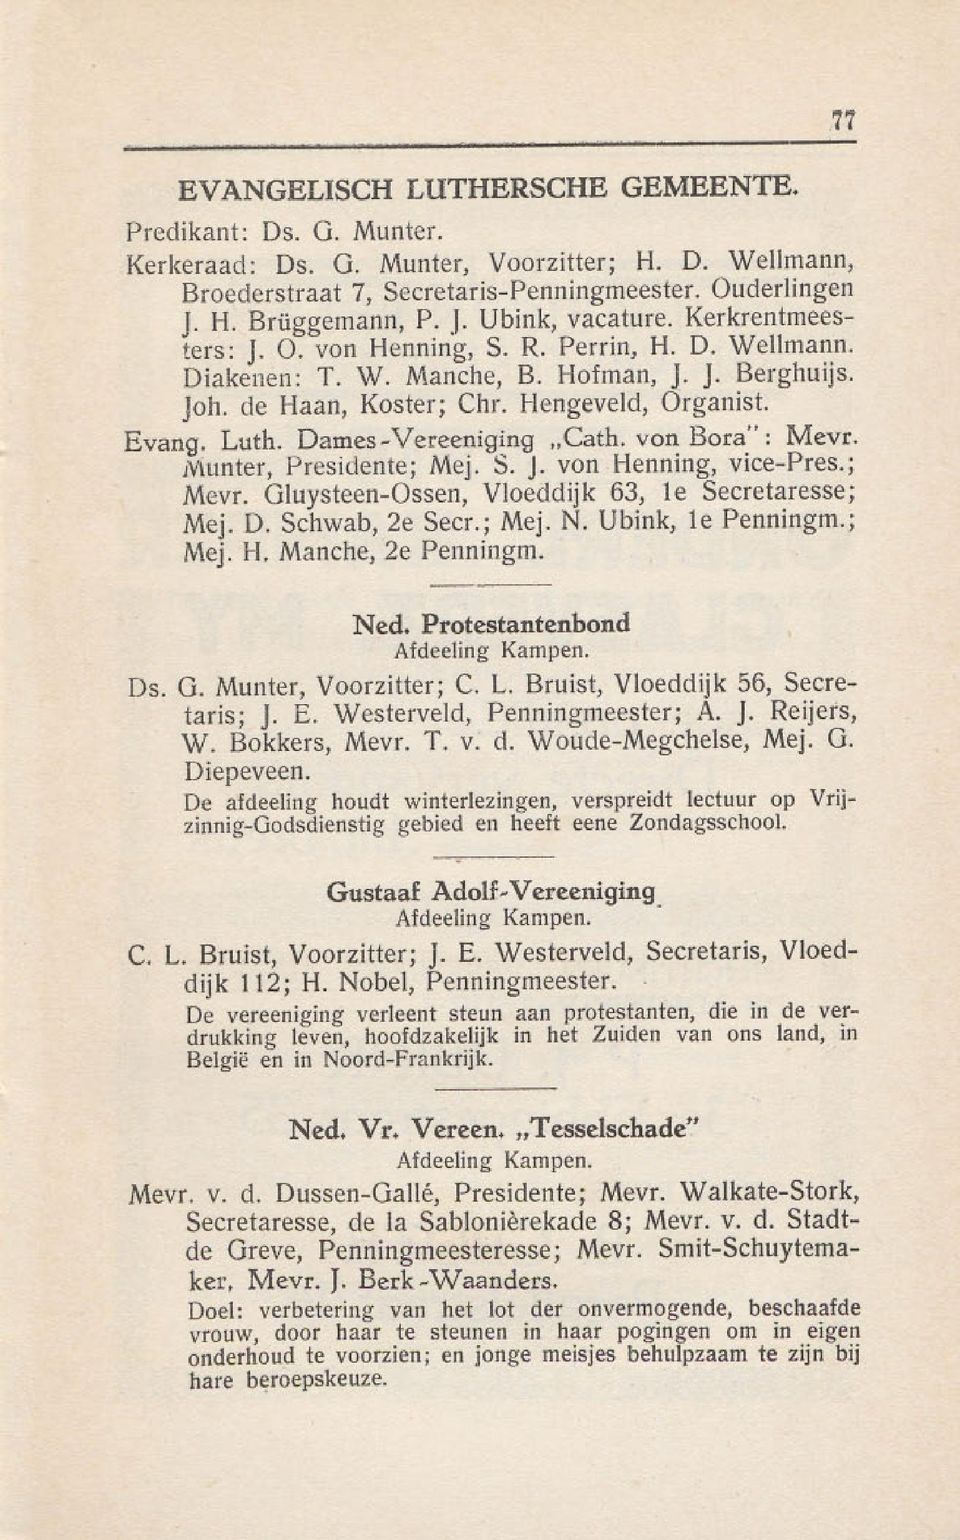 Dames-Vereeniqinq "eath. von Bora": Mevr. ivlunter, Presidente ; Mej. S. J. von Henning, vice-pres.; Mevr. Gluysteen-Ossen, Vloeddijk 63, 1e Secretaresse; Mej. D. Schwab, 2e Secr.; Mej. N.